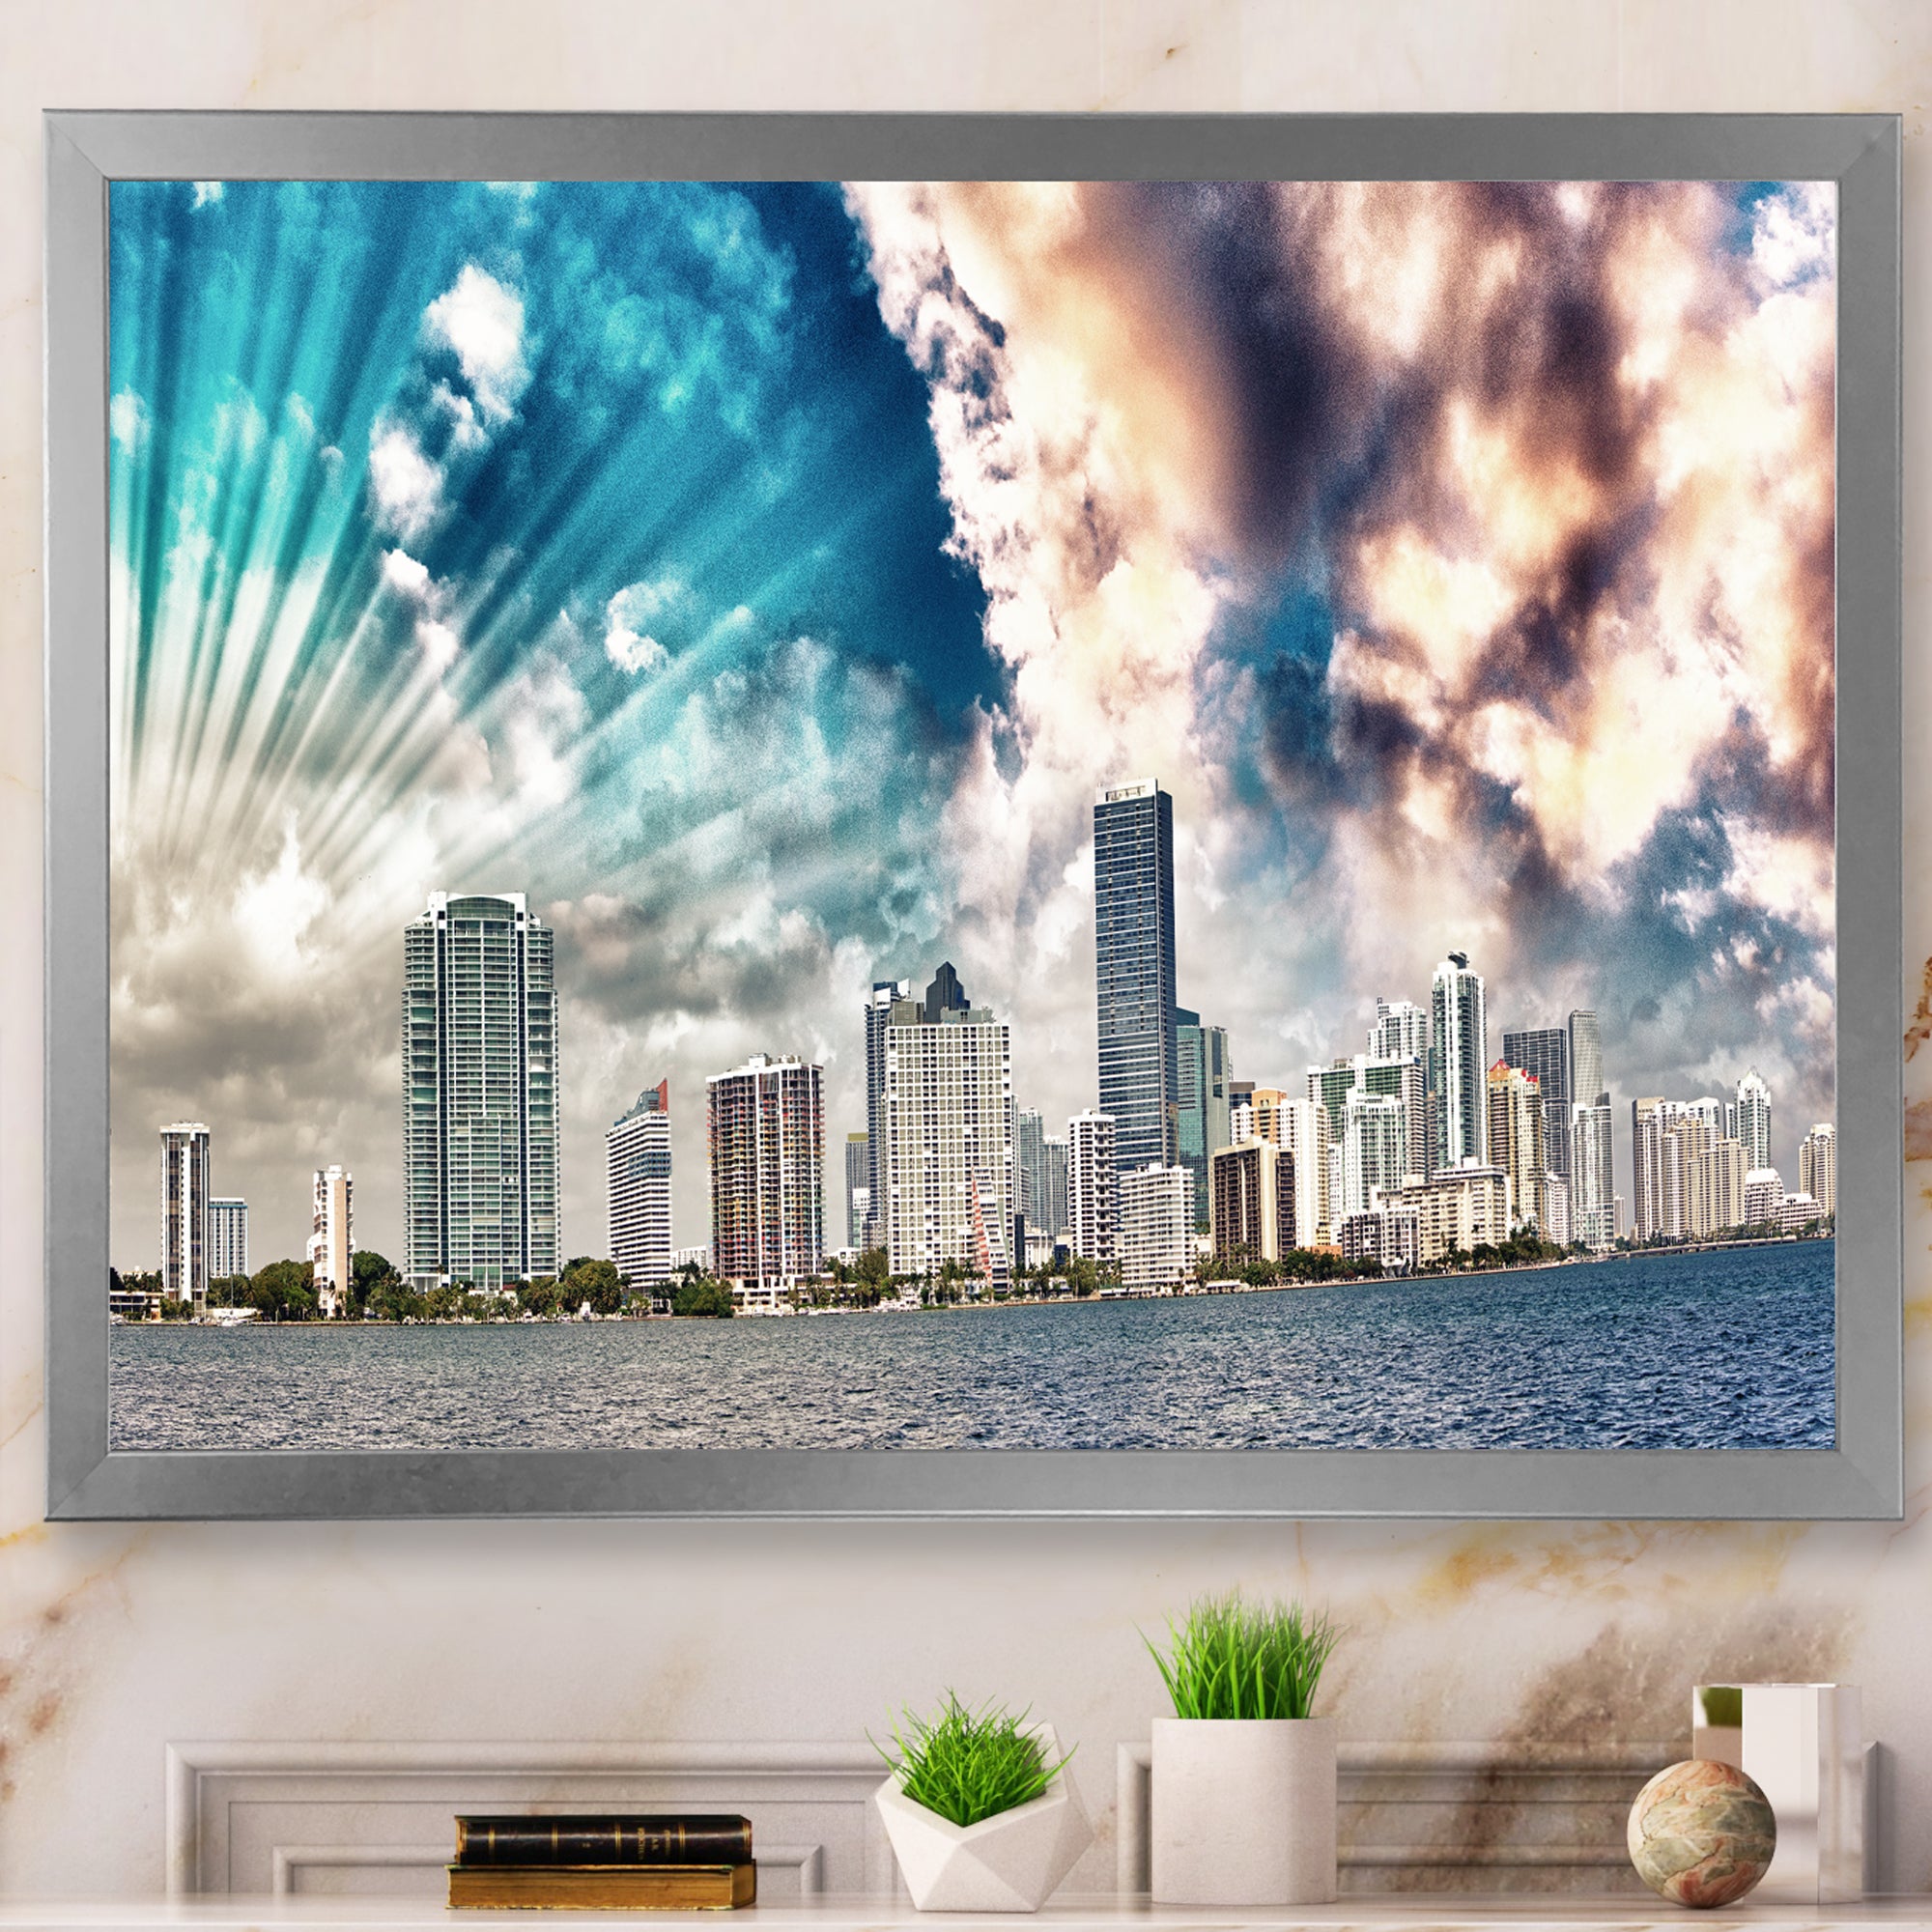 Miami Skyline with Clouds